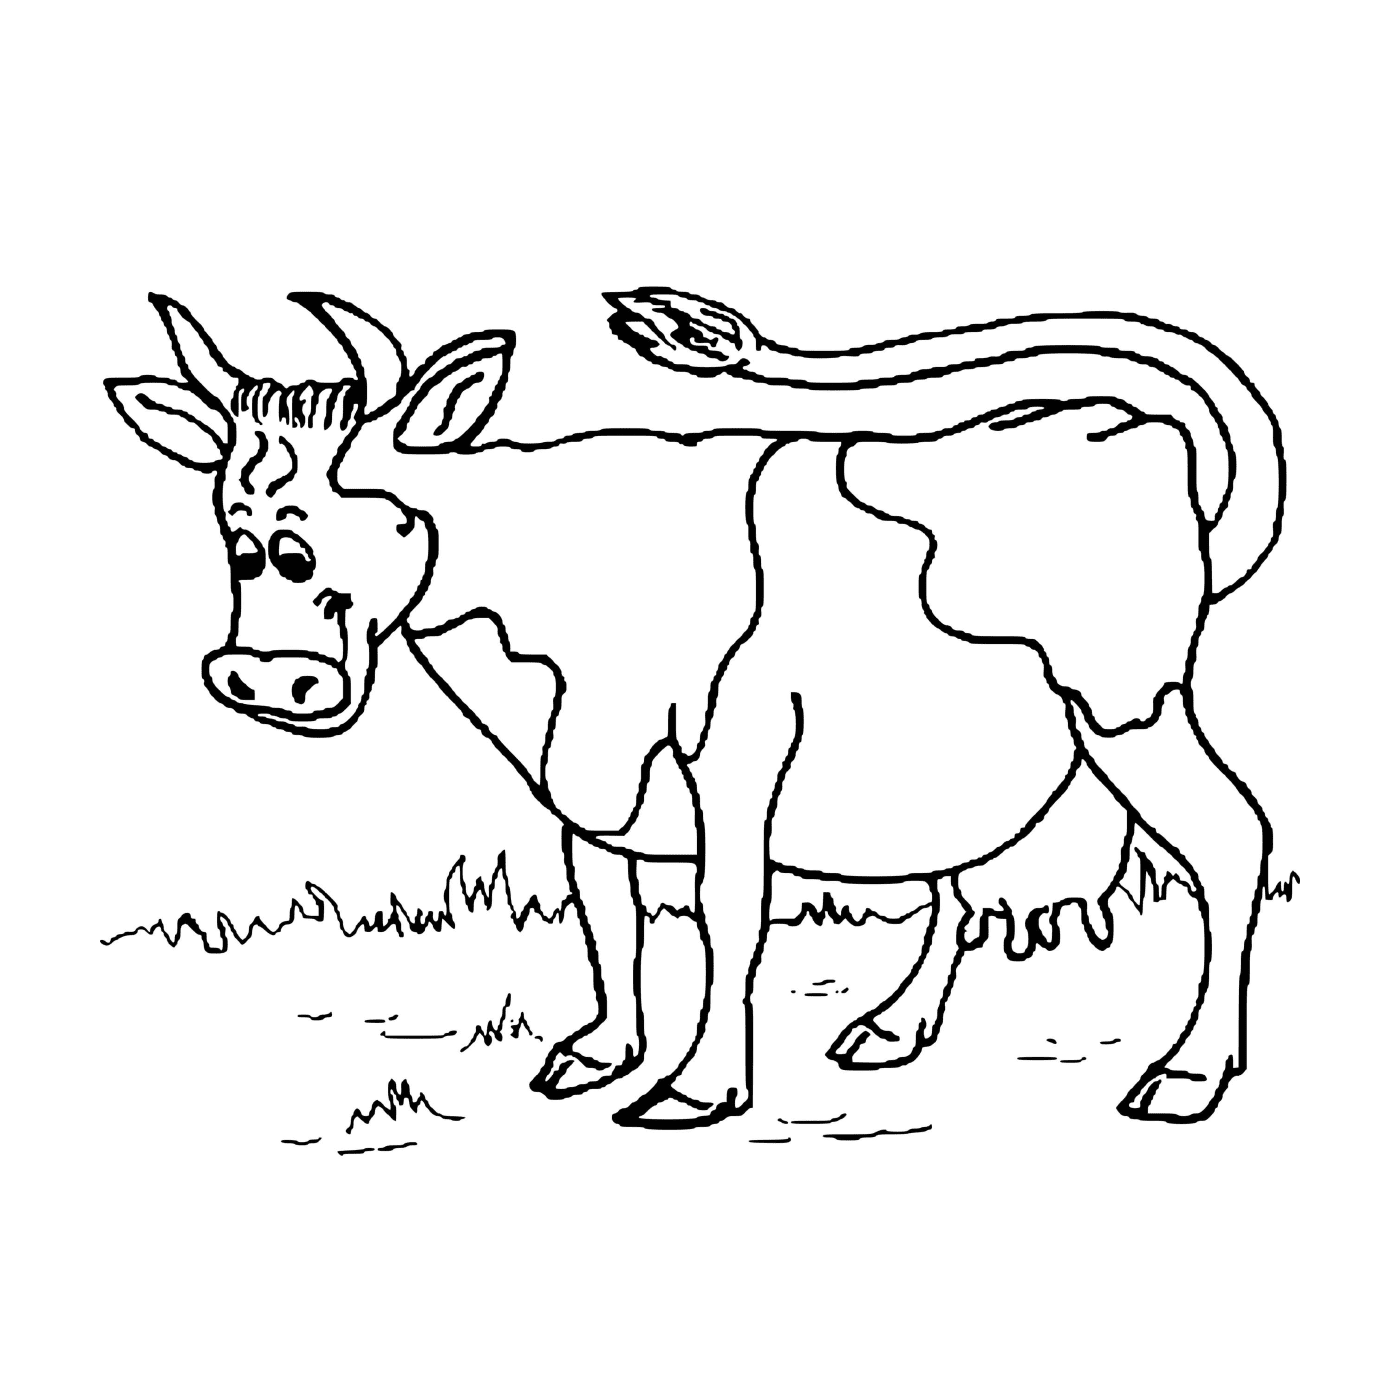  Buona mucca in una fattoria 